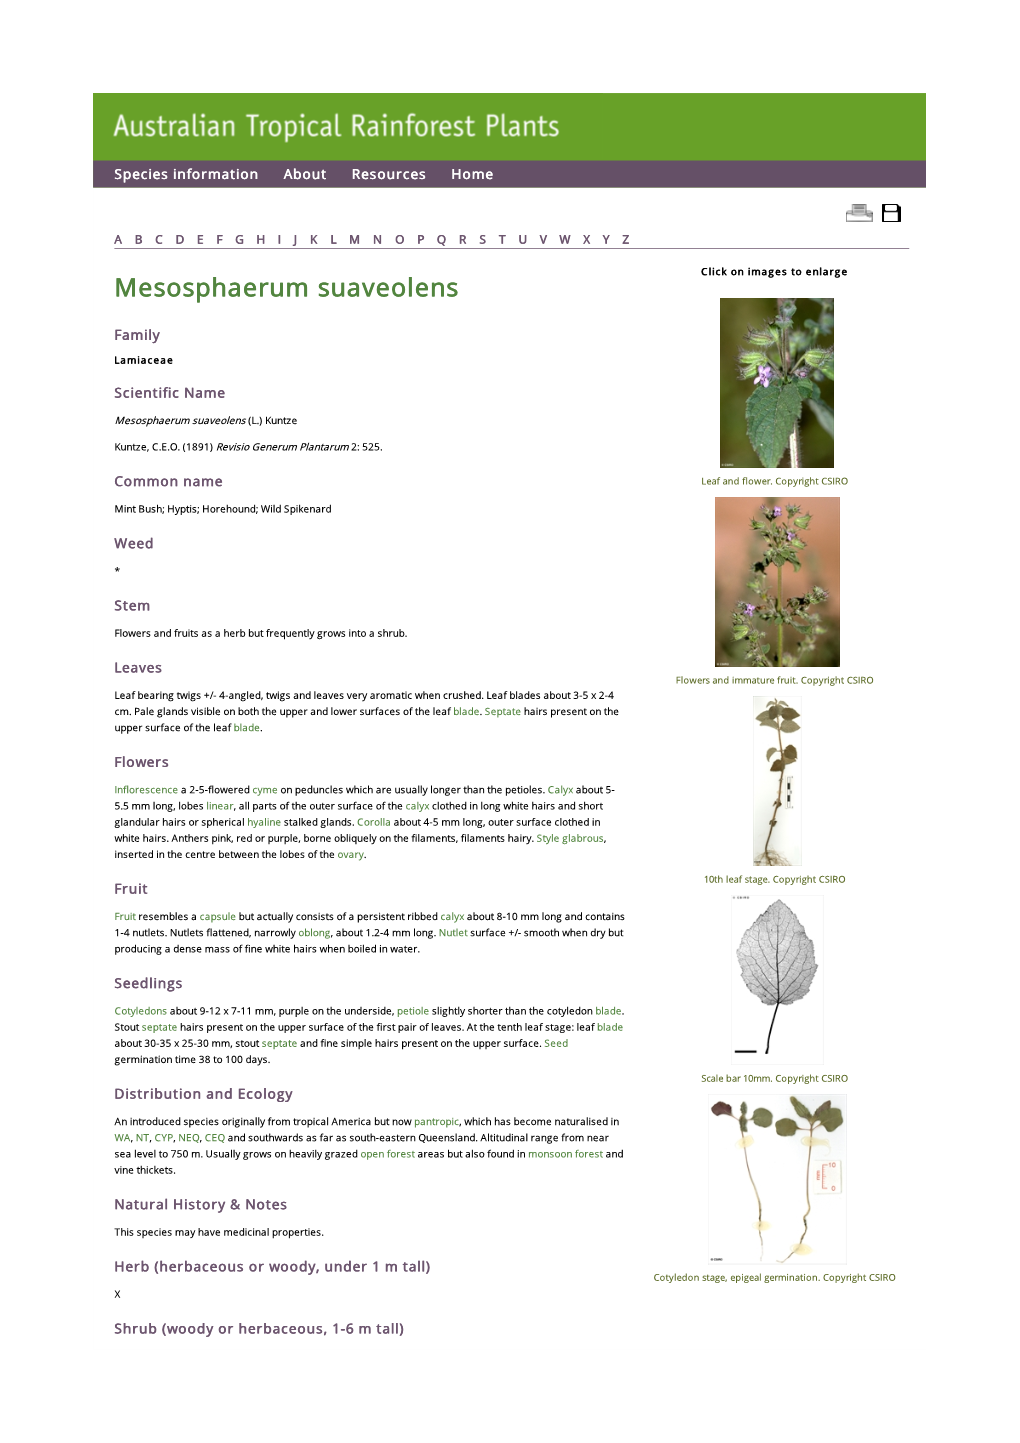 Mesosphaerum Suaveolens Click on Images to Enlarge